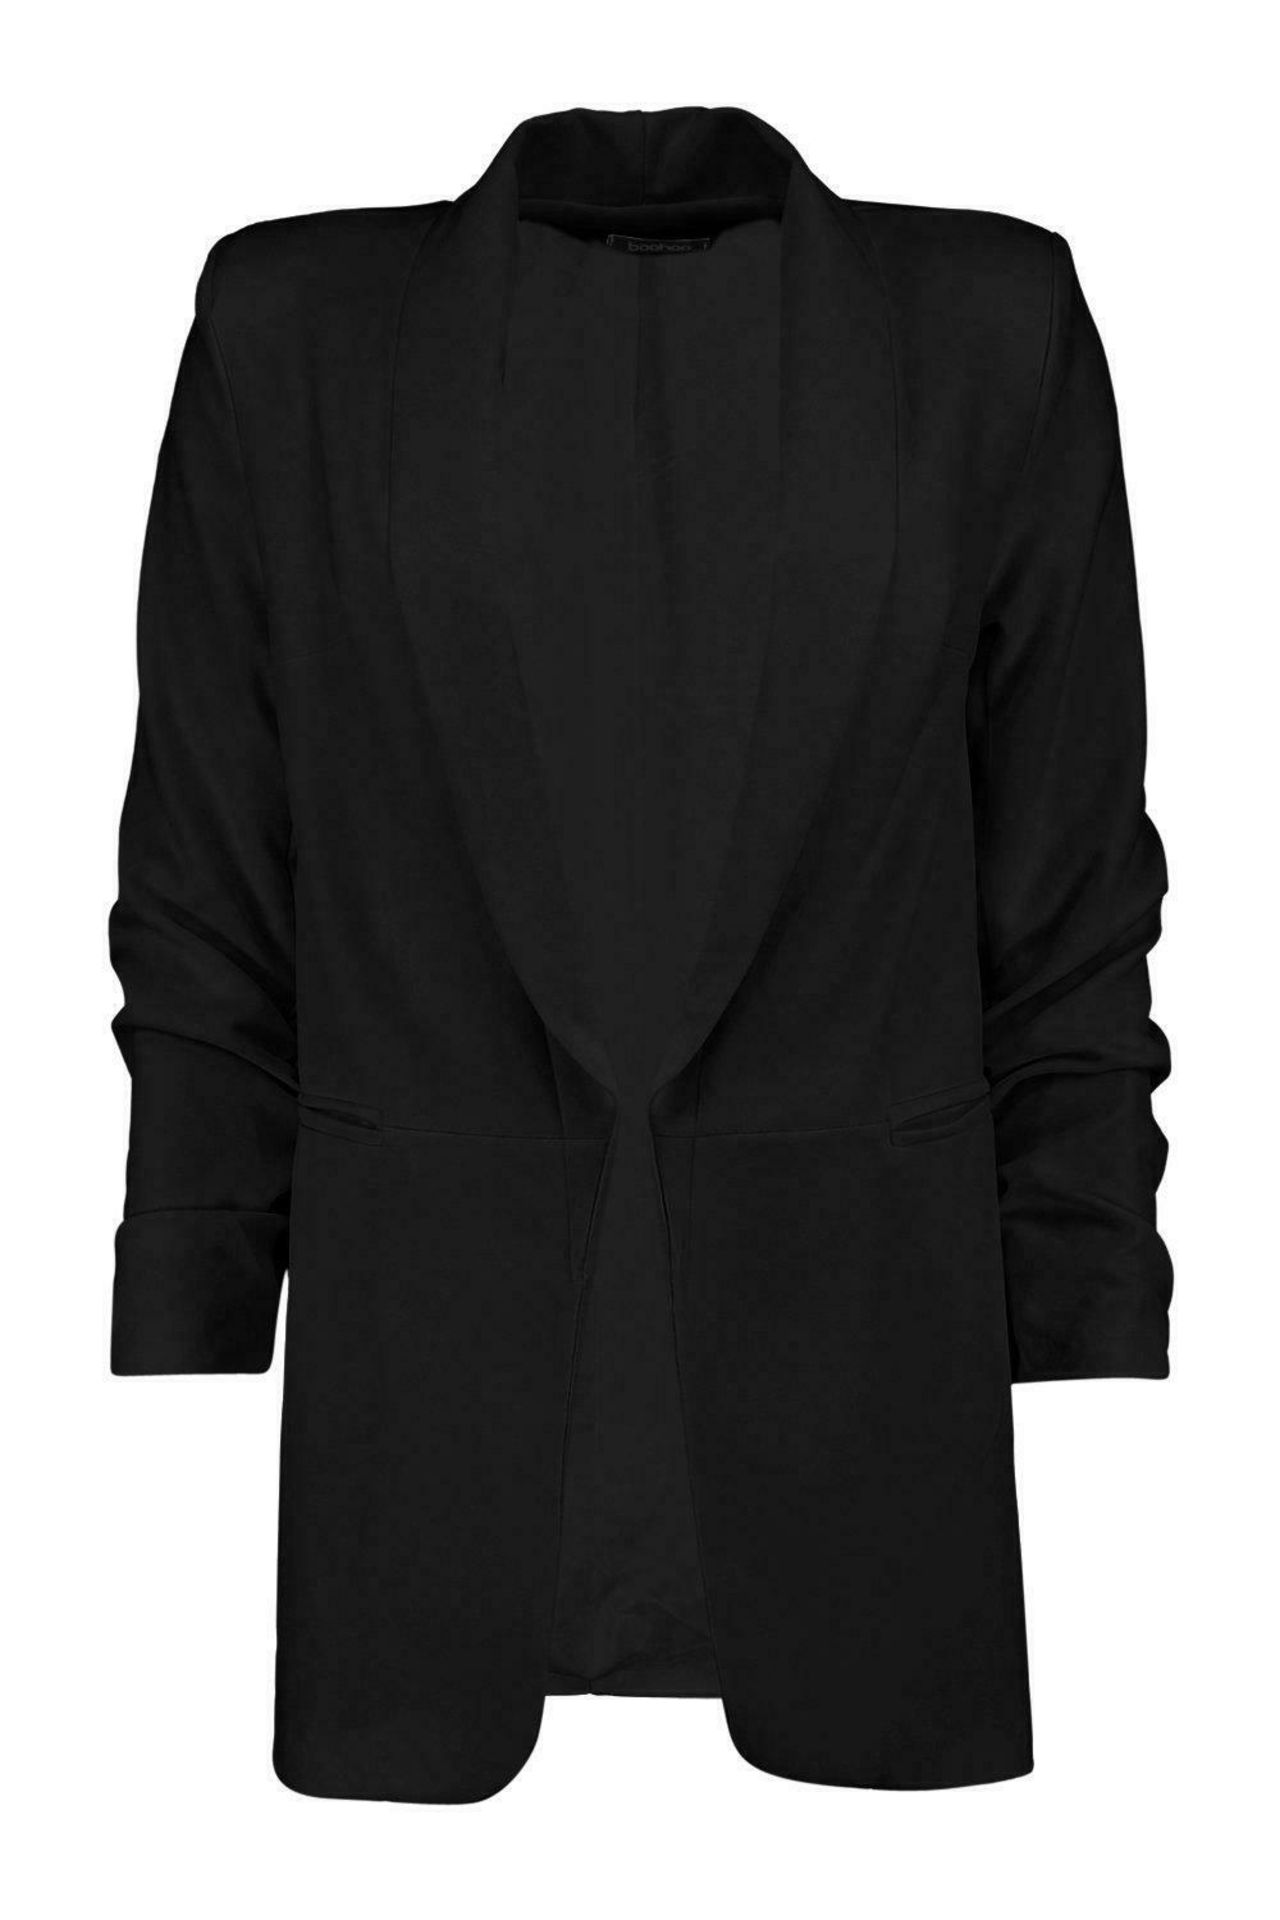 JOB LOT 18 Boohoo Ruched Sleeve Blazer Black Size 12 RRP £30 EACH BNWT - Image 2 of 2